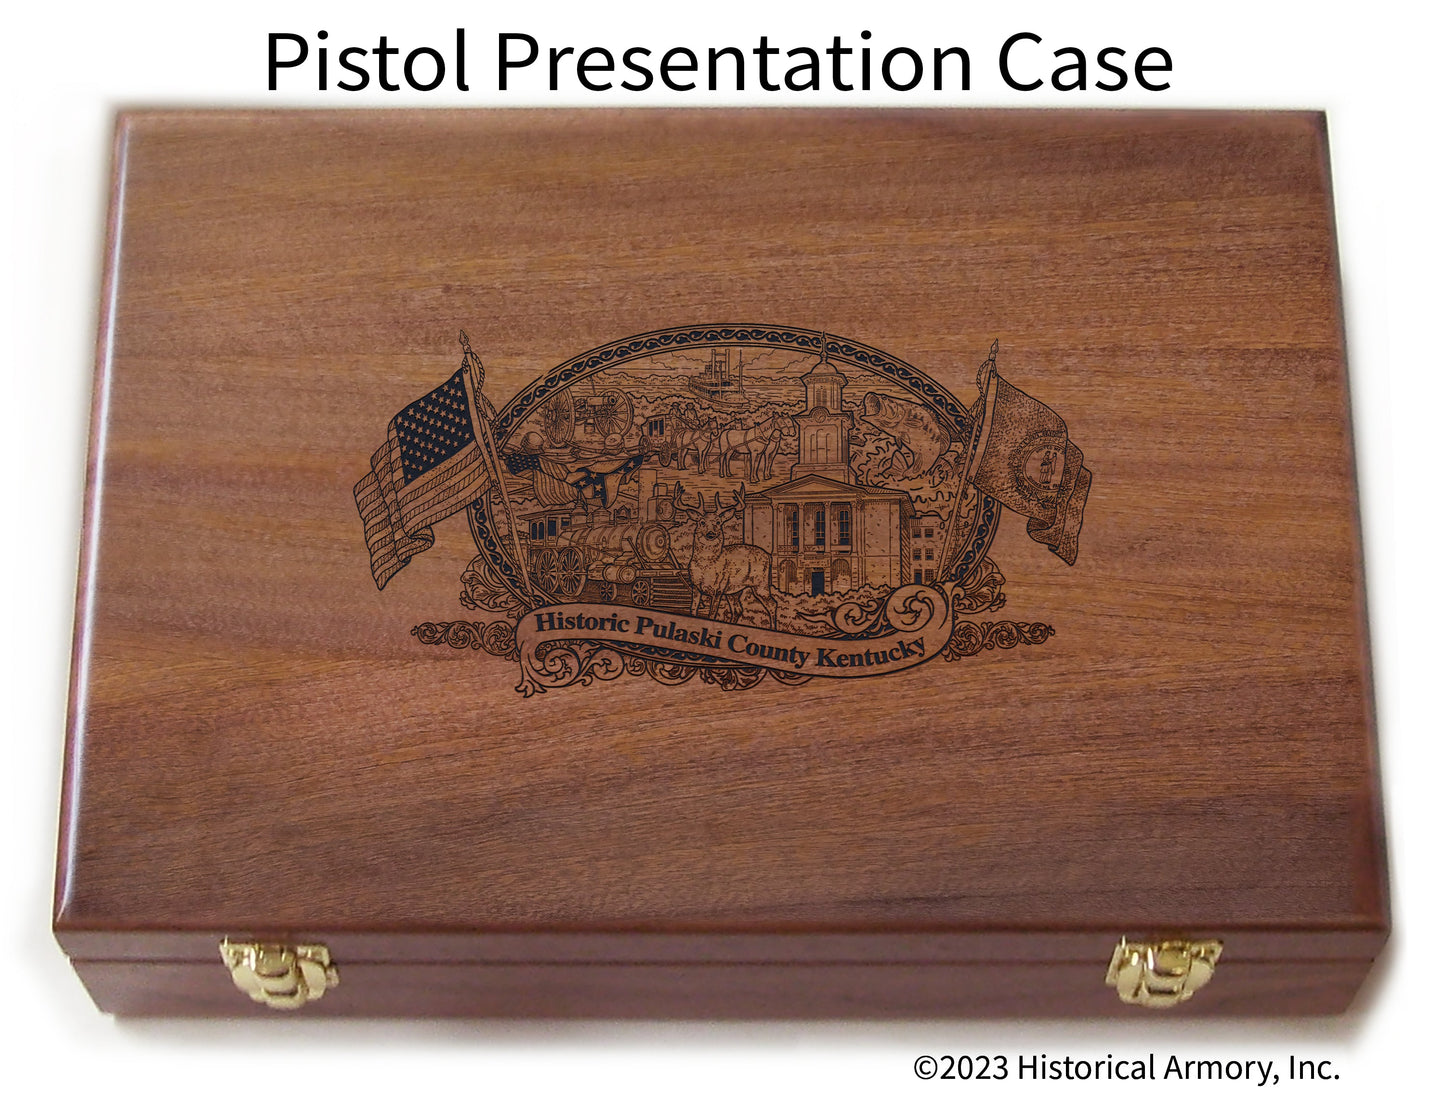 Pulaski County Kentucky Engraved .45 Auto Ruger 1911 Presentation Case